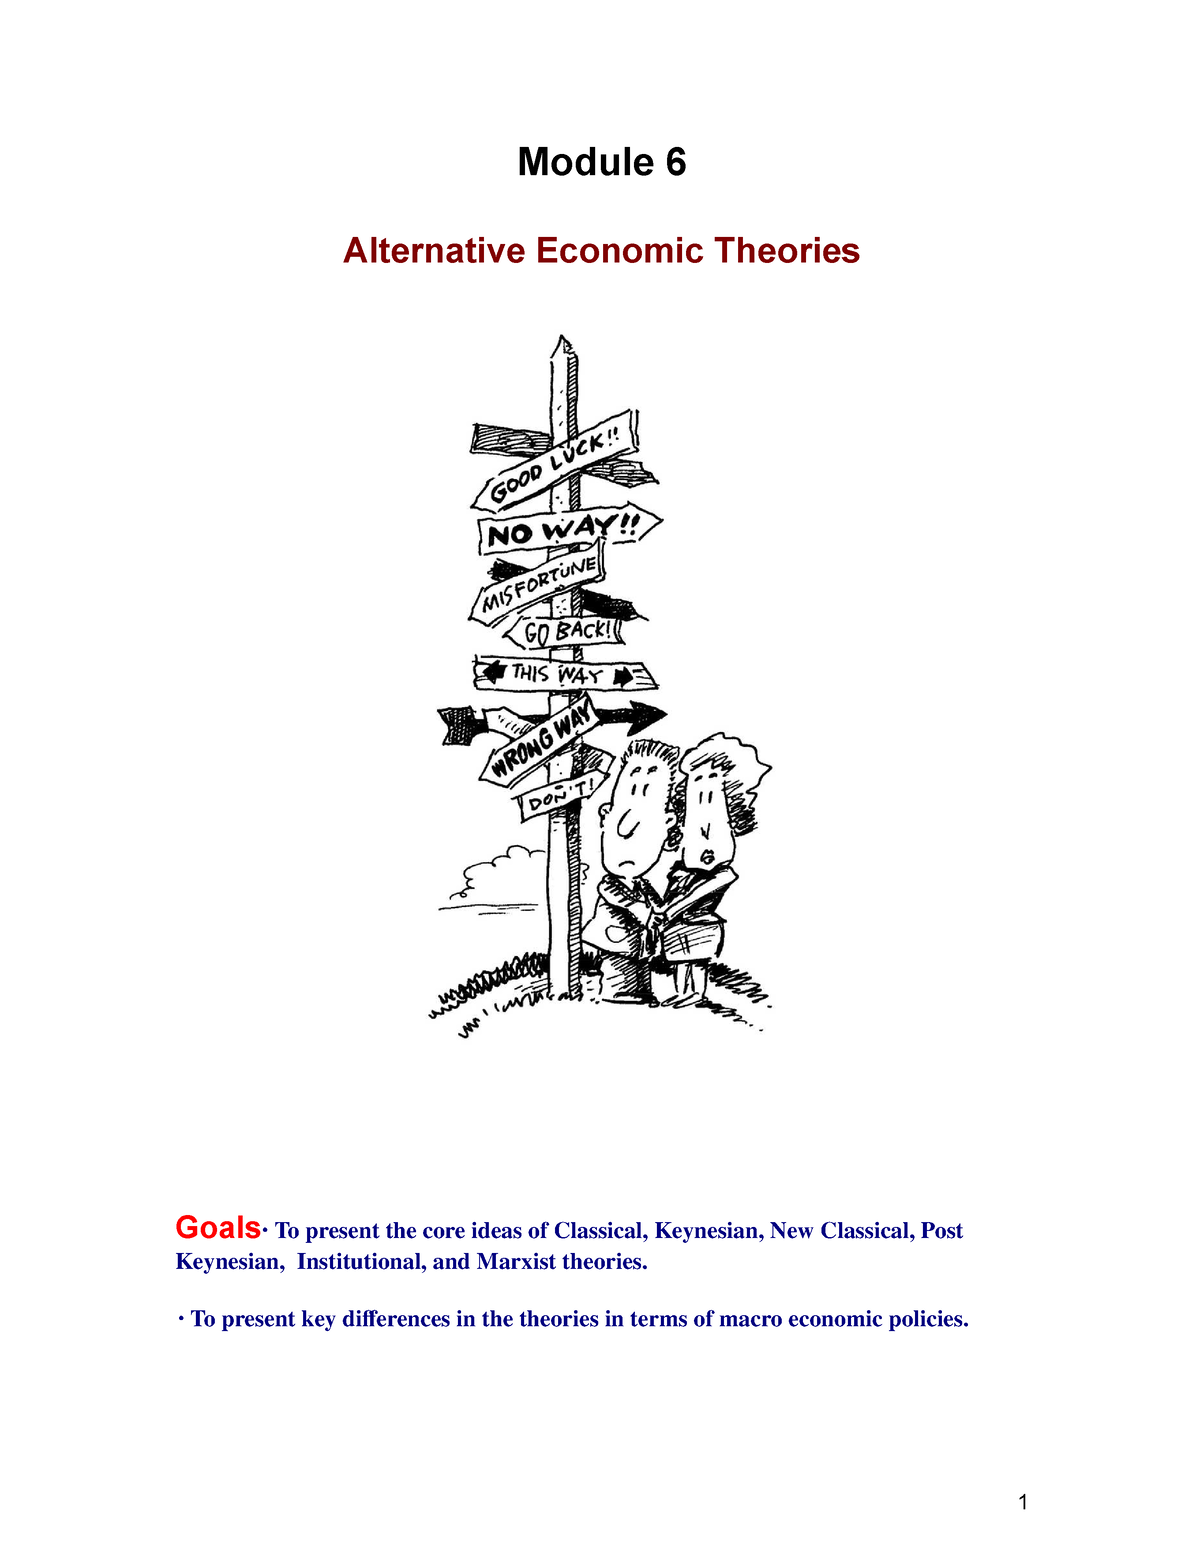 economic theories assignment